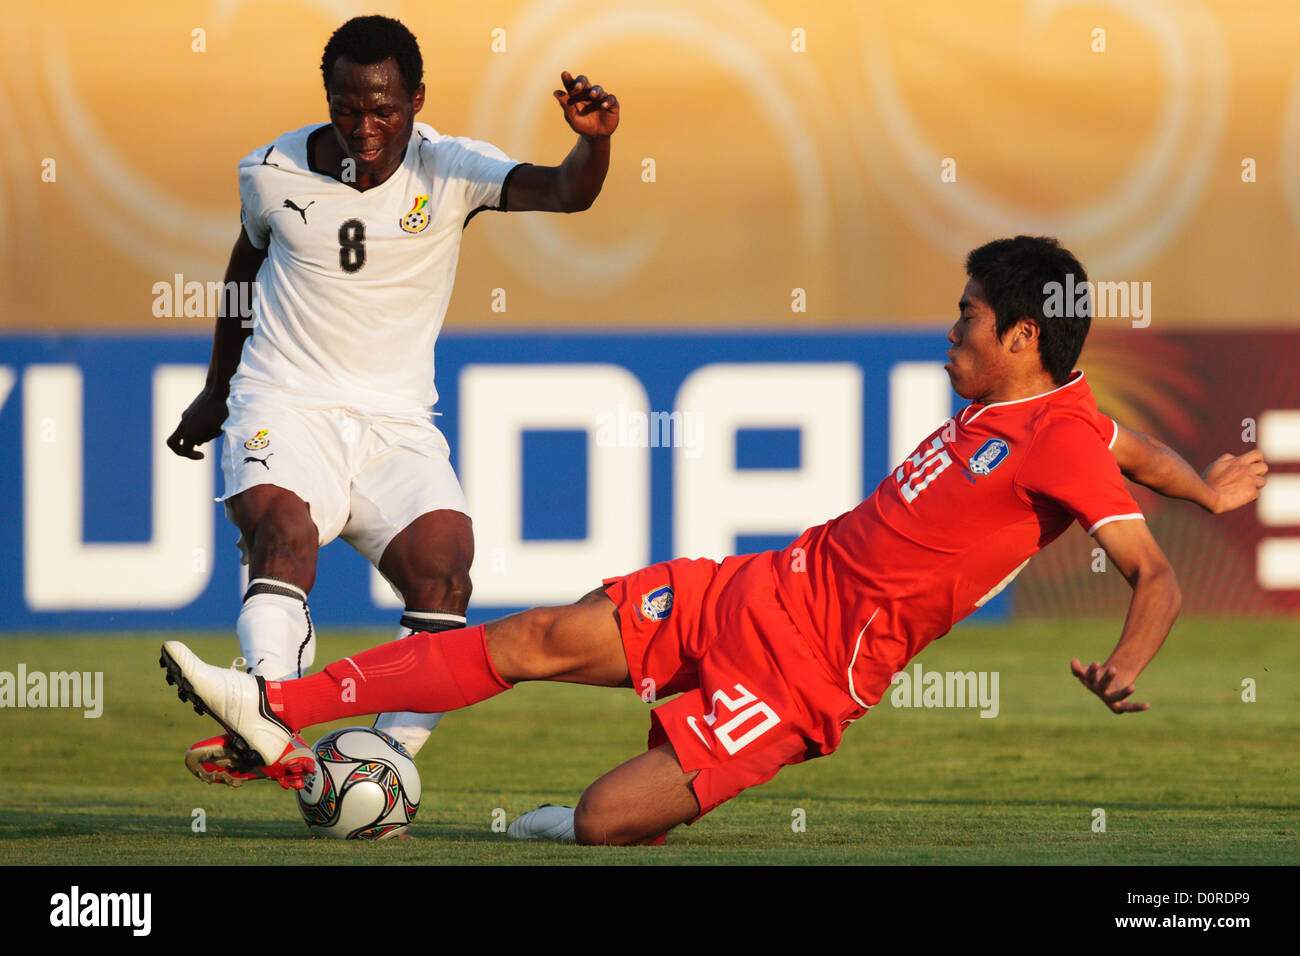 Hee Seong Park of South Korea (20) slides for a tackle on Emmanuel Agyemang Badu of Ghana (8) during a FIFA U20 World Cup match. Stock Photo